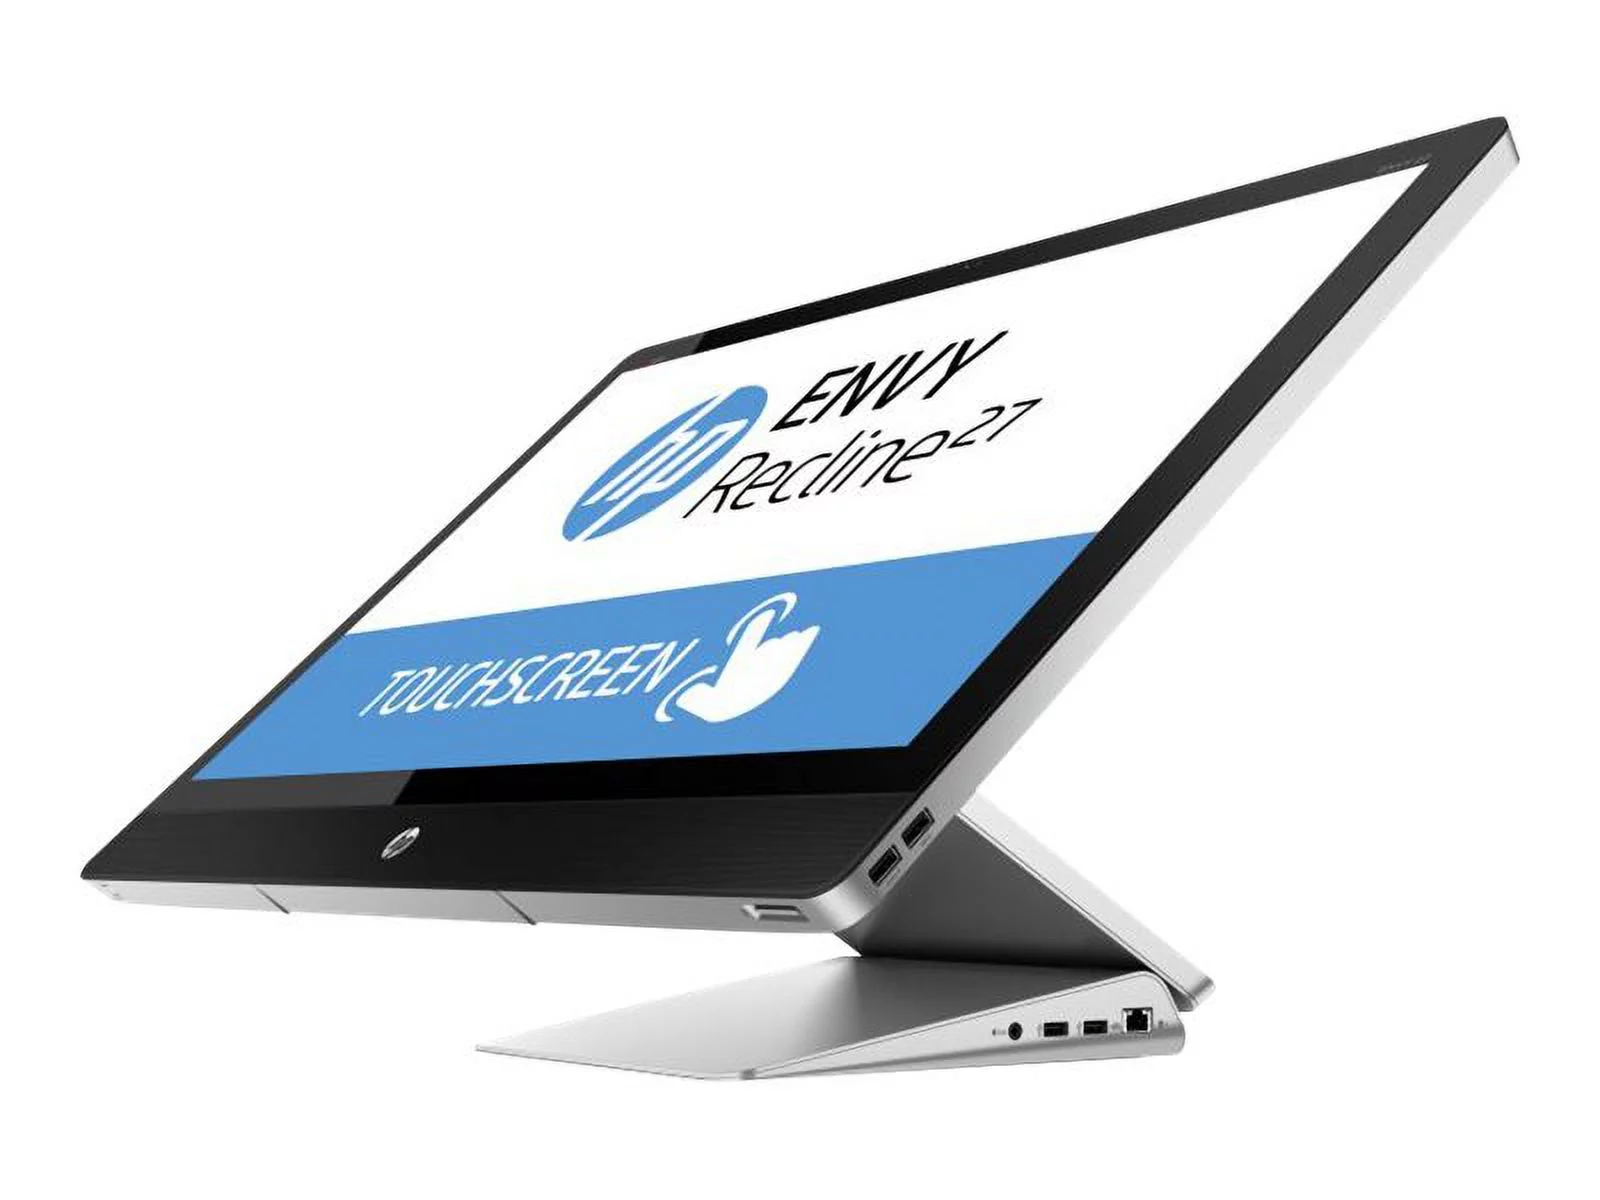 ENVY Recline 27-k300 TouchSmart All-in-One Desktop PC series